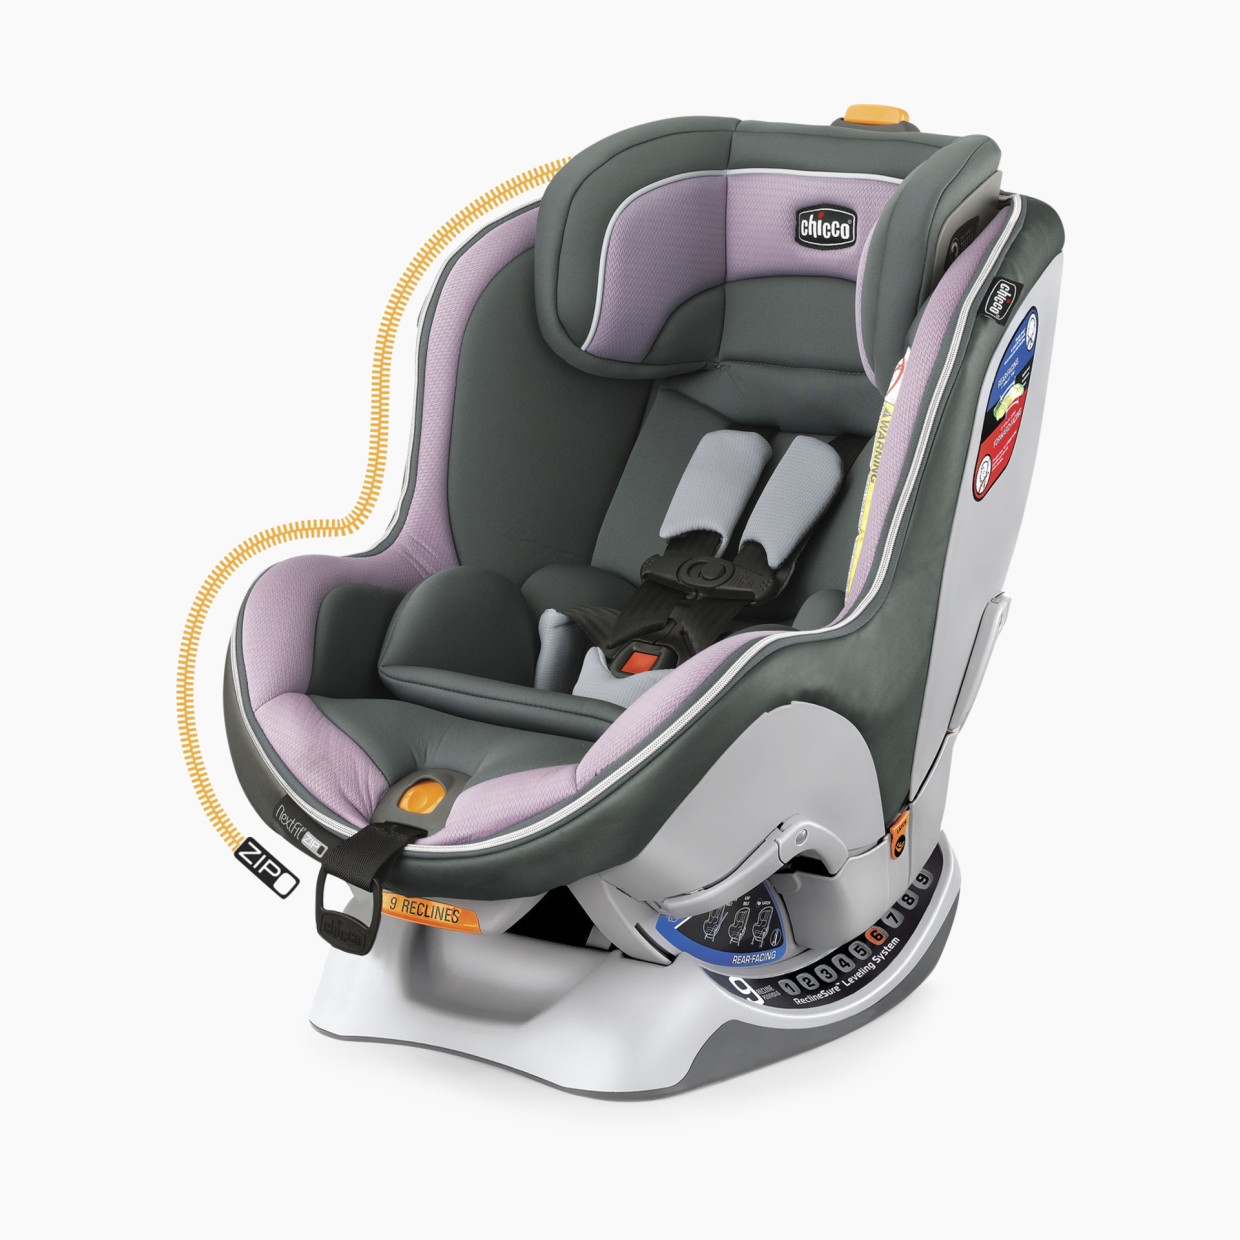 Chicco NextFit Zip Convertible Car Seat - Lavender.